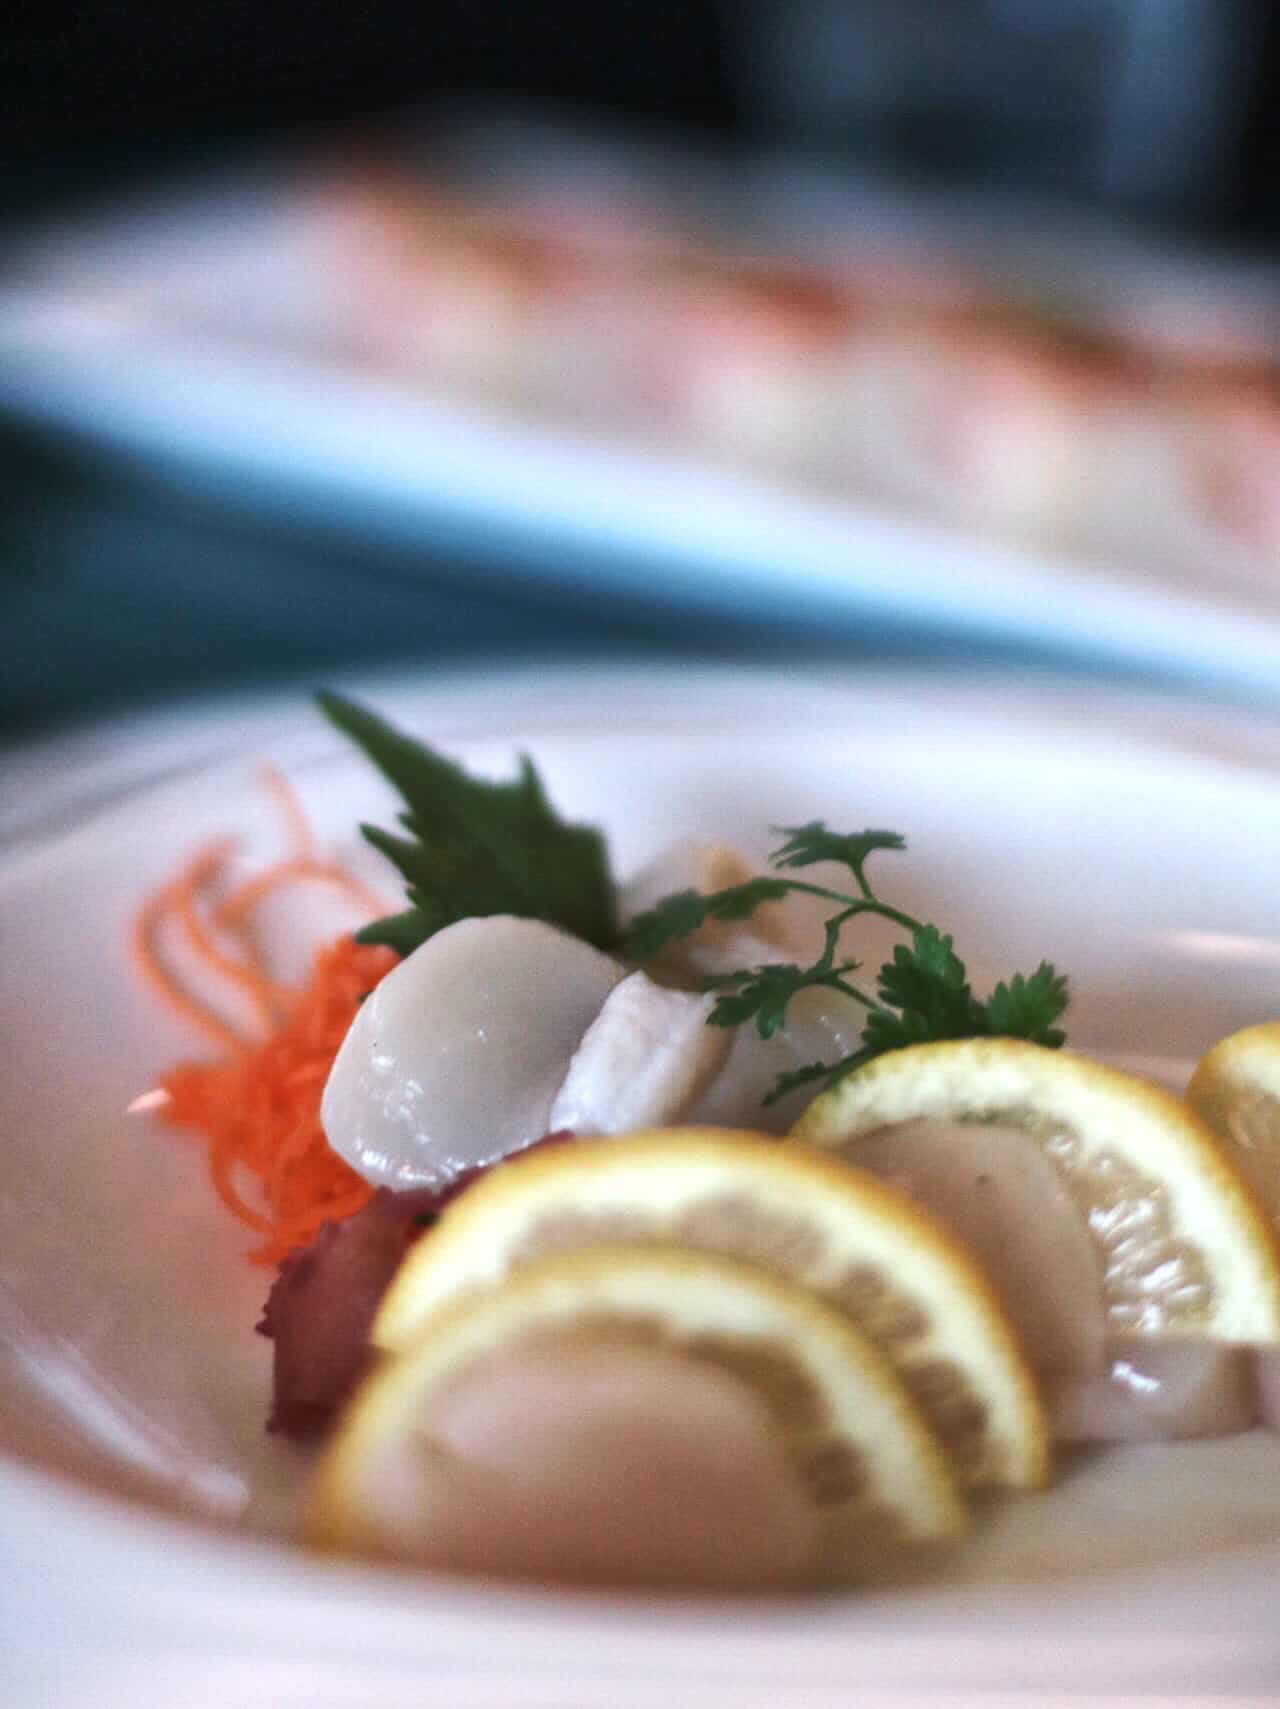 Scallop sashimi at Miku Sushi in Vancouver, British Columbia